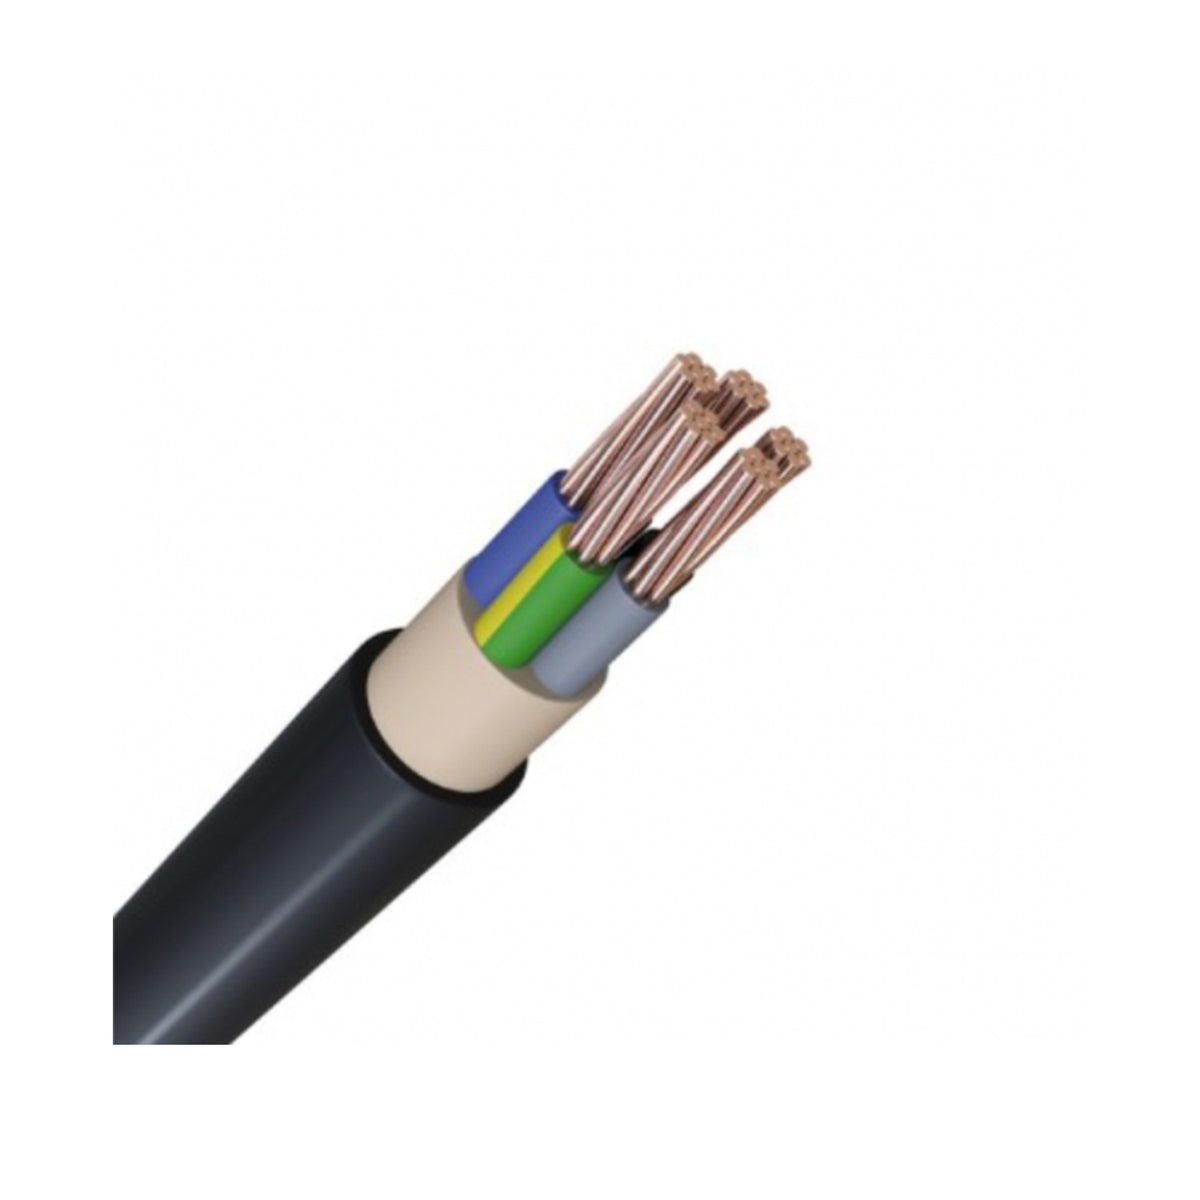 Helukabel 5-core 25mm², 4AWG Black AC Cable 0.6/1kV Three Phase NYY-J